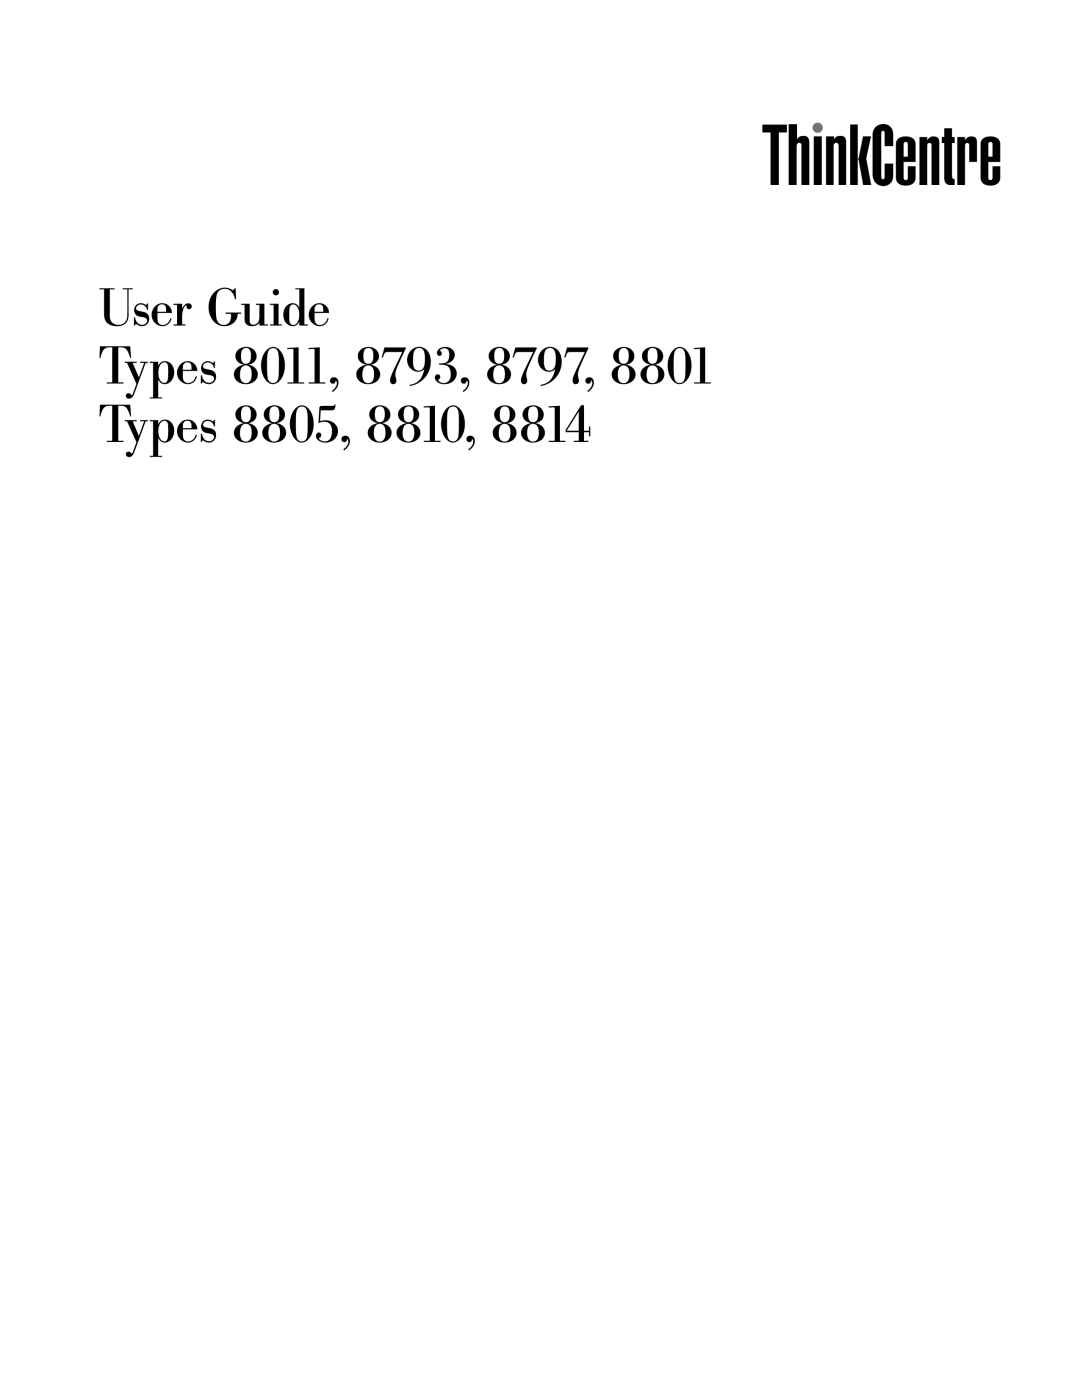 Lenovo 8793, 8814, 8801, 8797, 8011 manual User Guide Types, Types 8805, 8810 